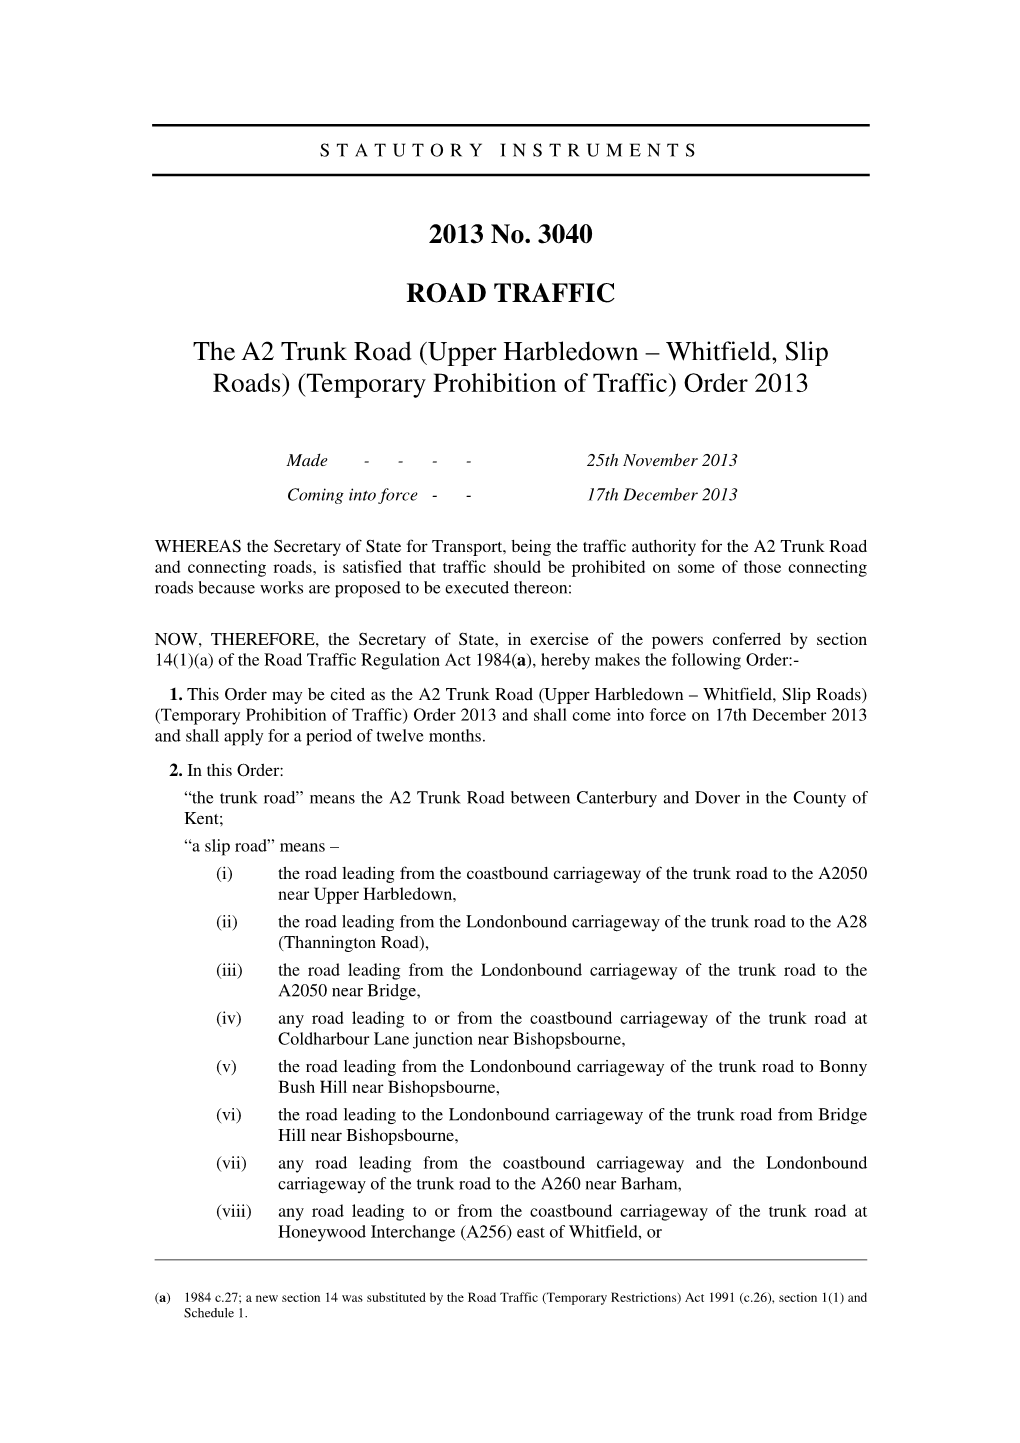 2013 No. 3040 ROAD TRAFFIC the A2 Trunk Road (Upper Harbledown – Whitfield, Slip Roads)